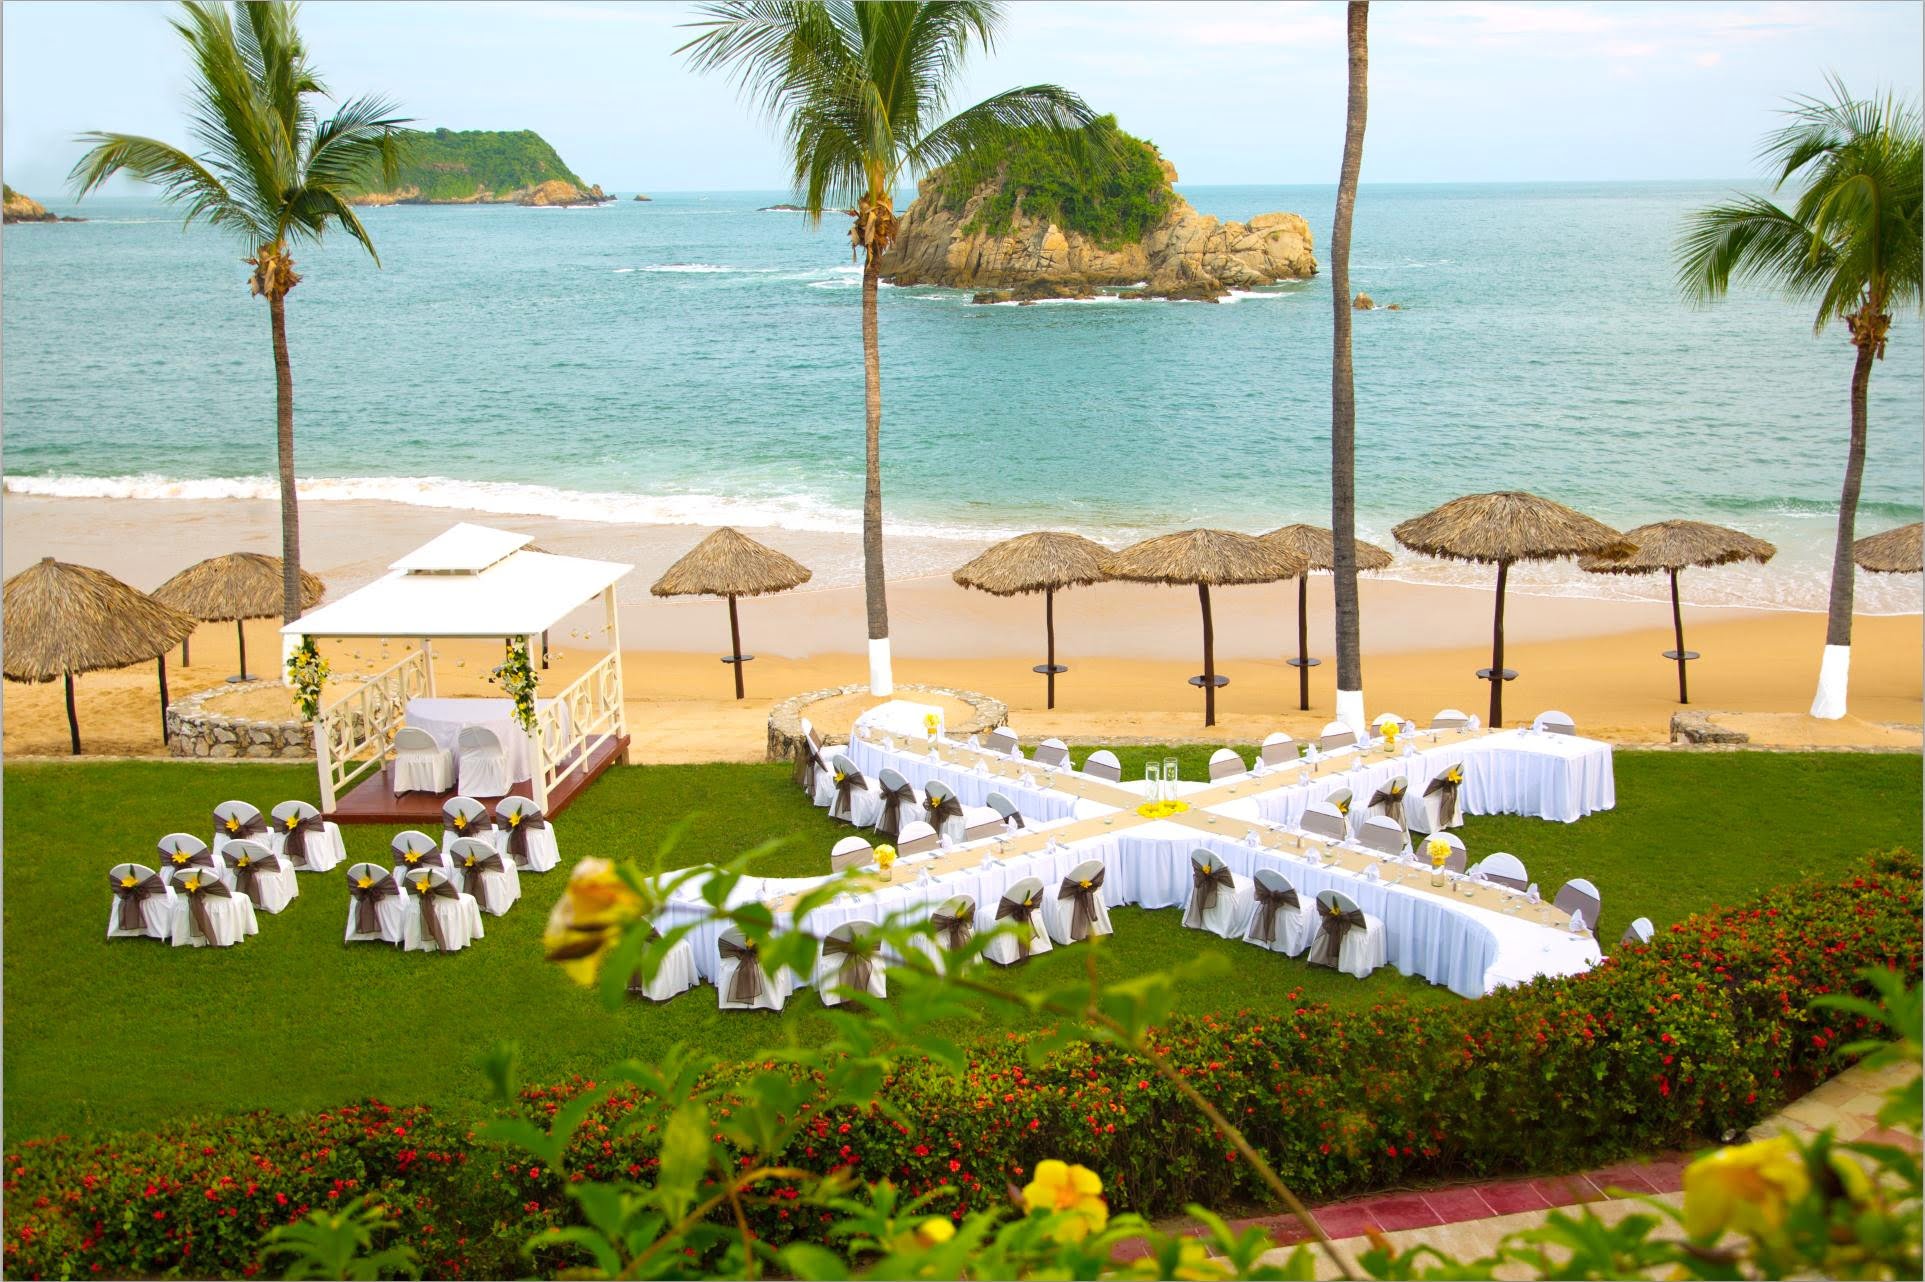 Barcelo Huatulco beach wedding packages